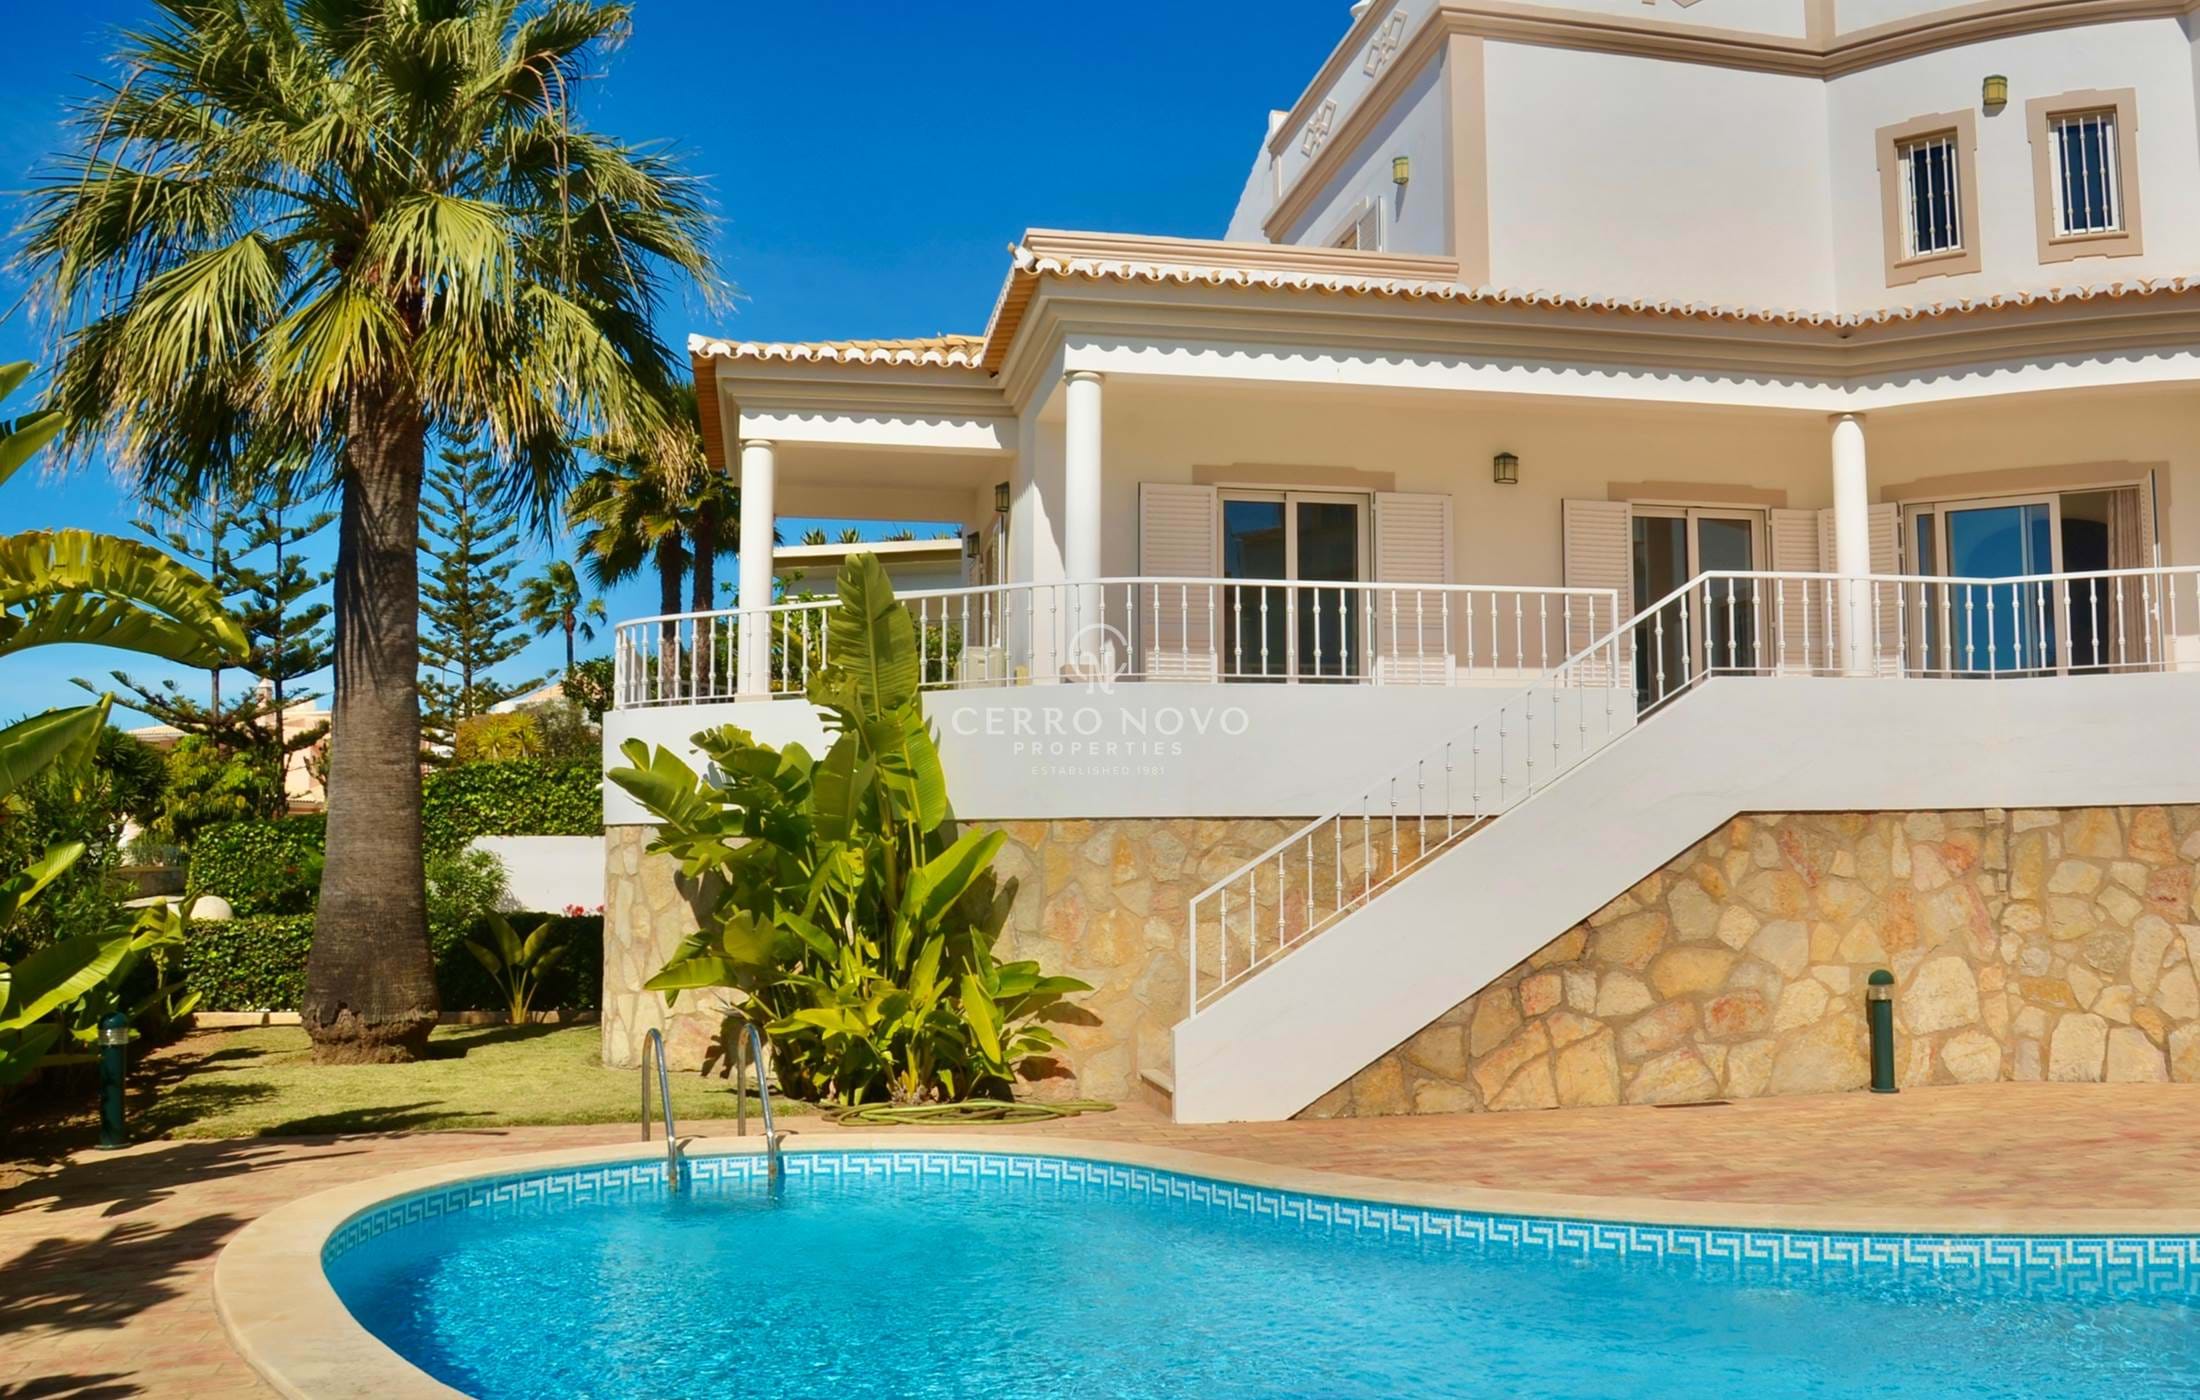 Large, four bedroom villa with pool & ocean views